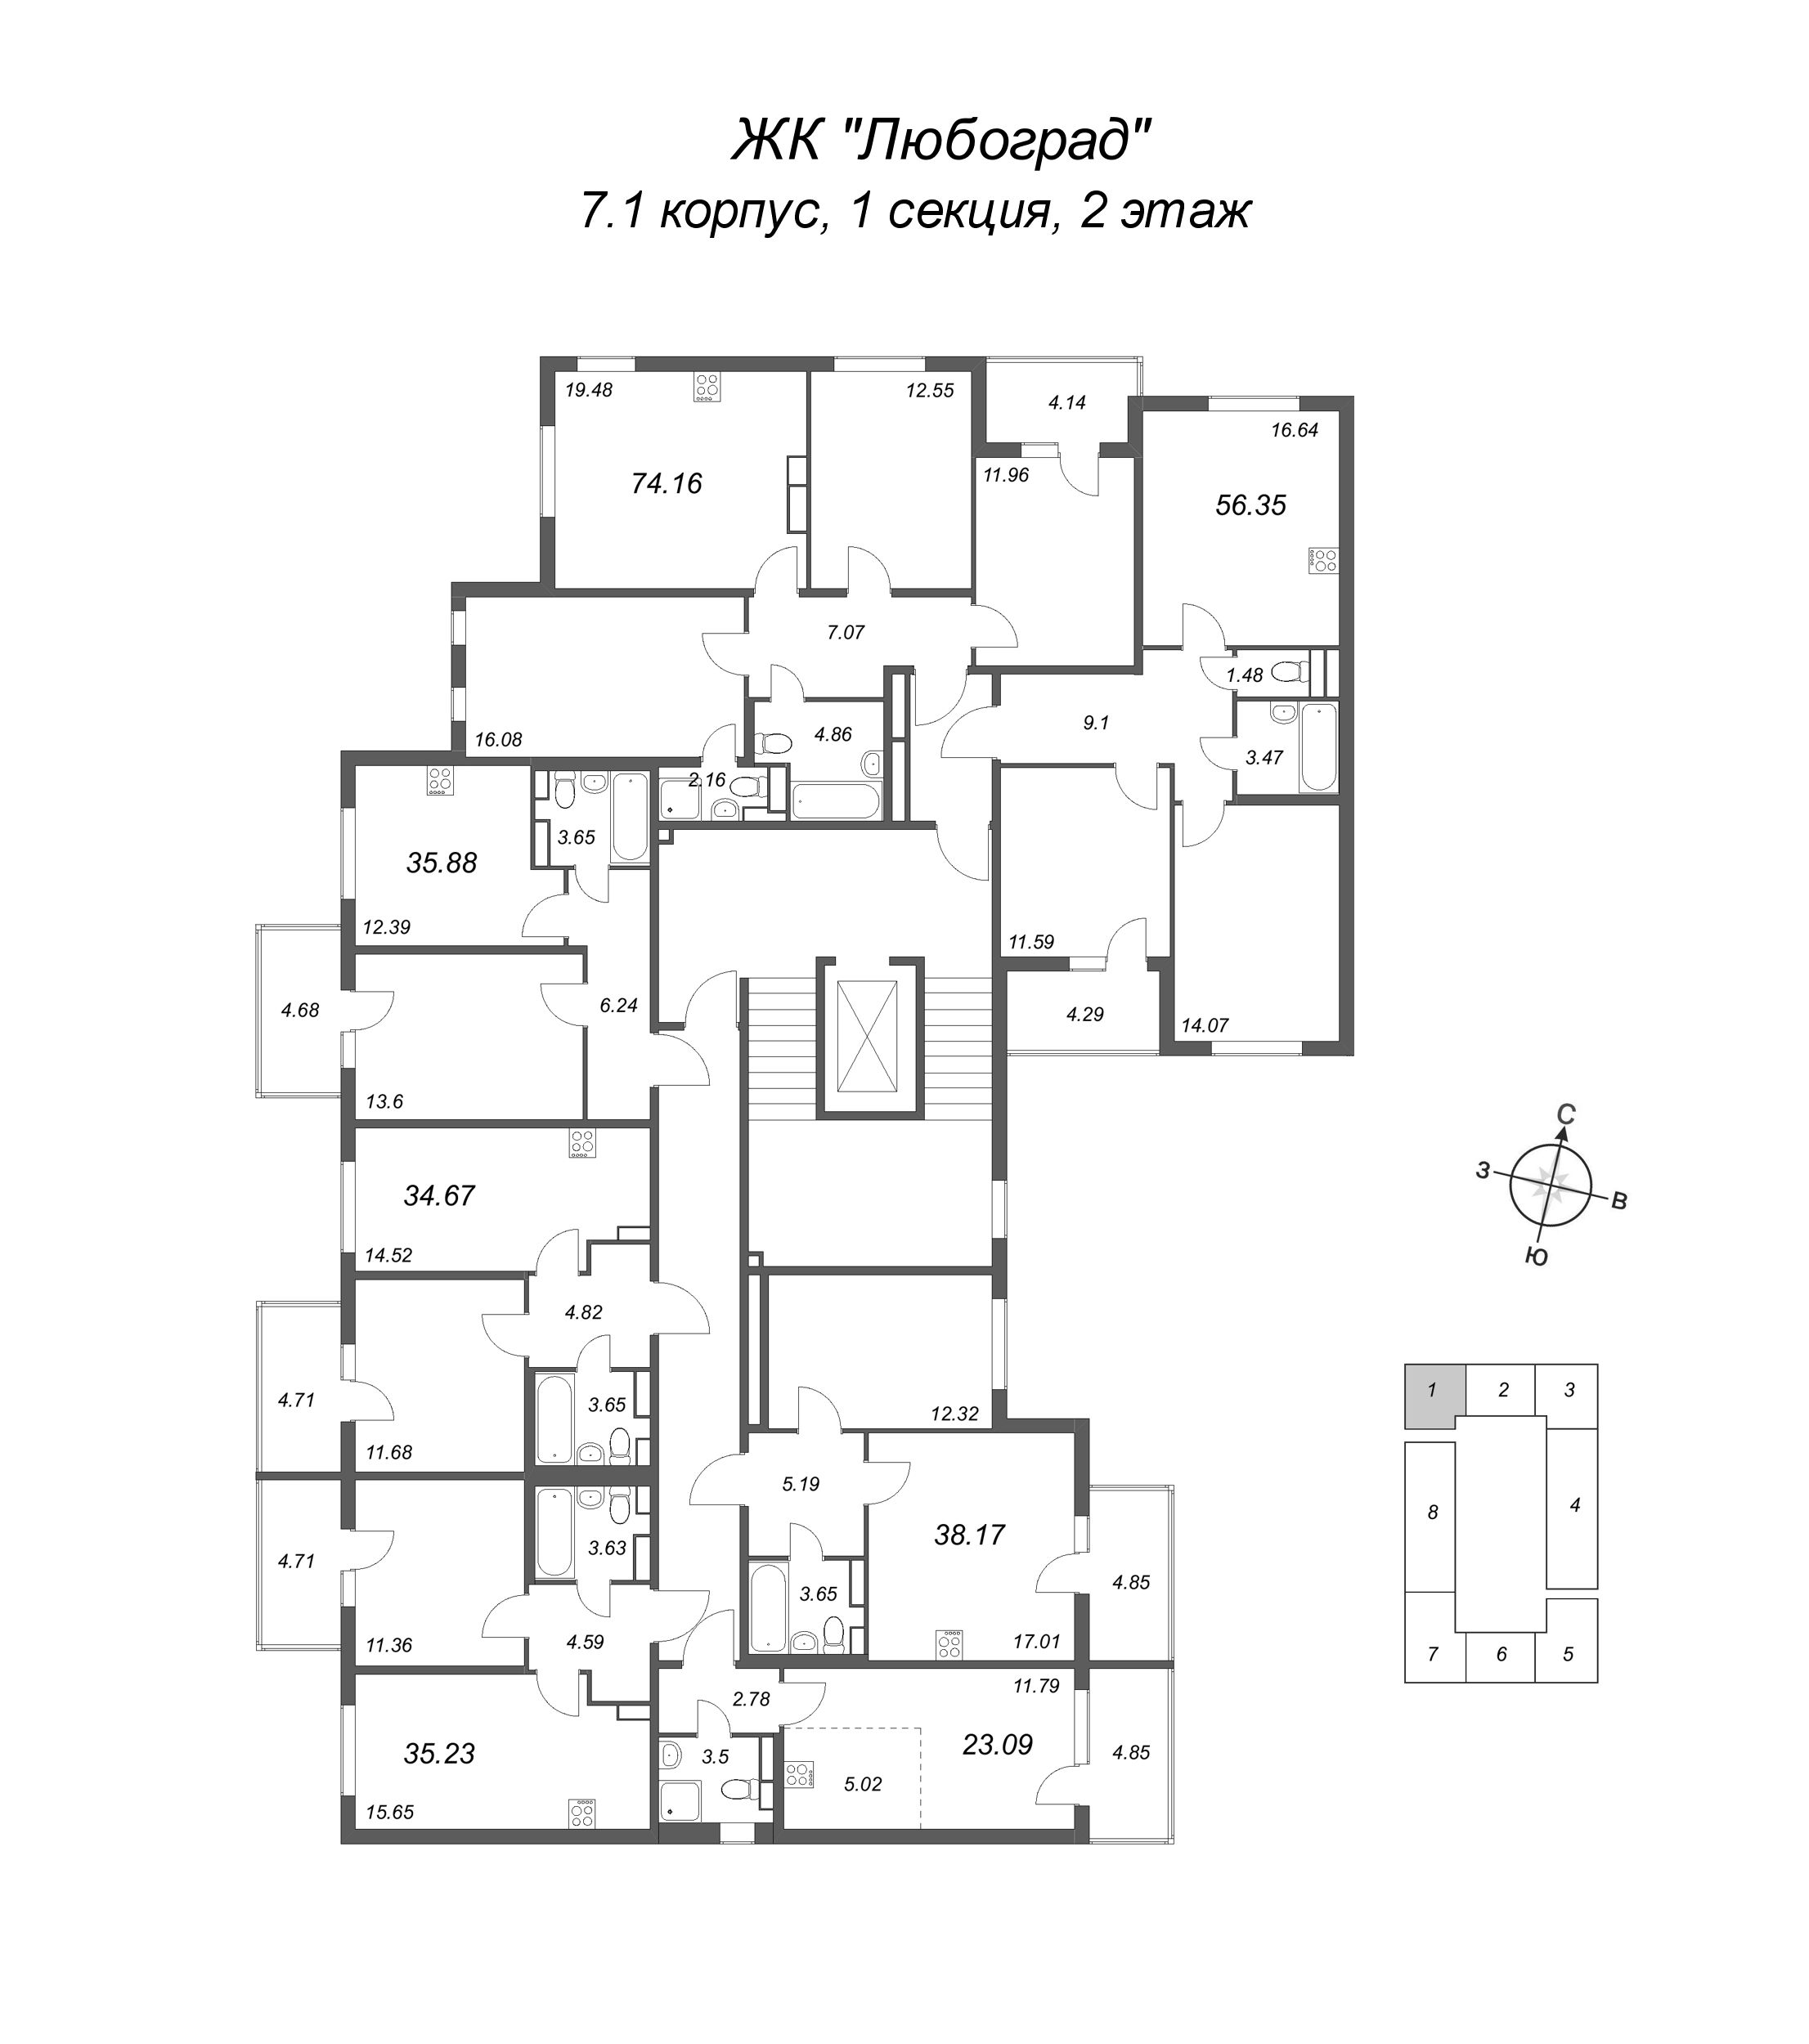 2-комнатная (Евро) квартира, 35.23 м² - планировка этажа